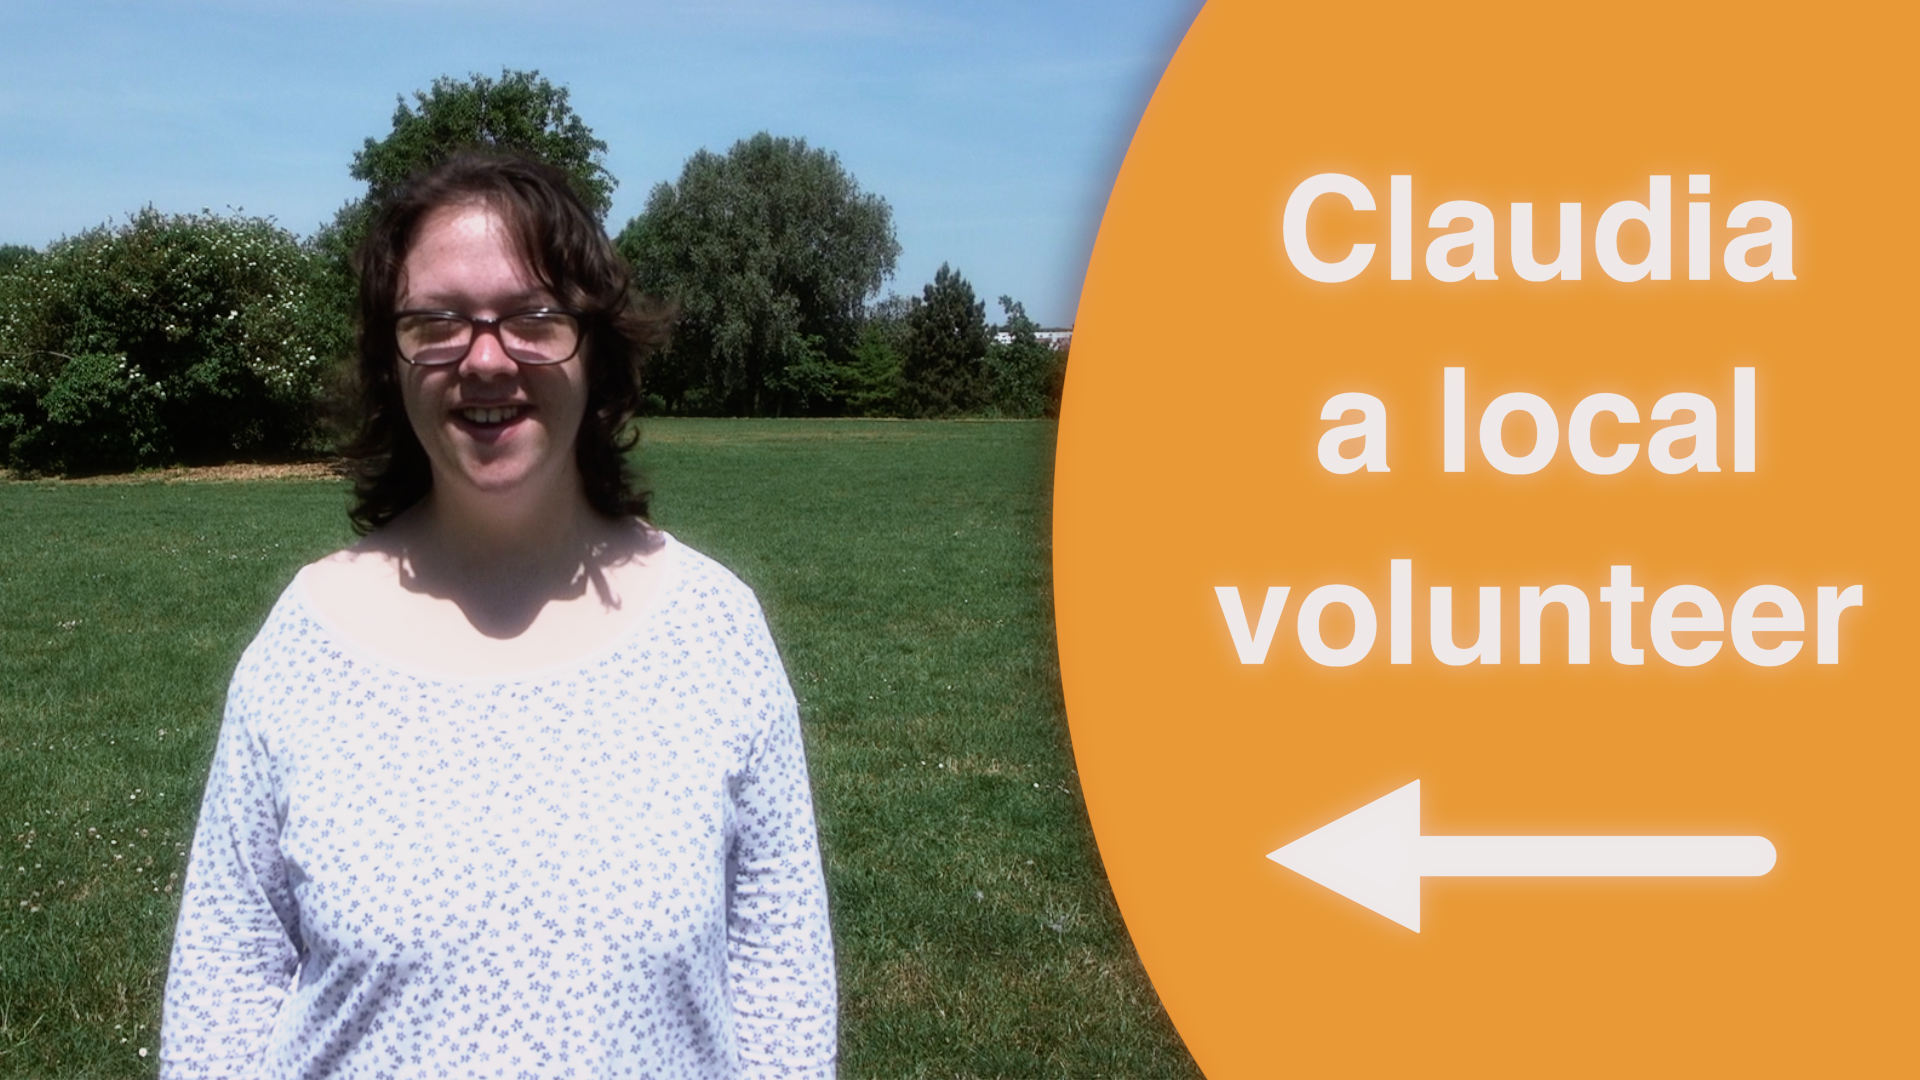 Claudia, a volunteer